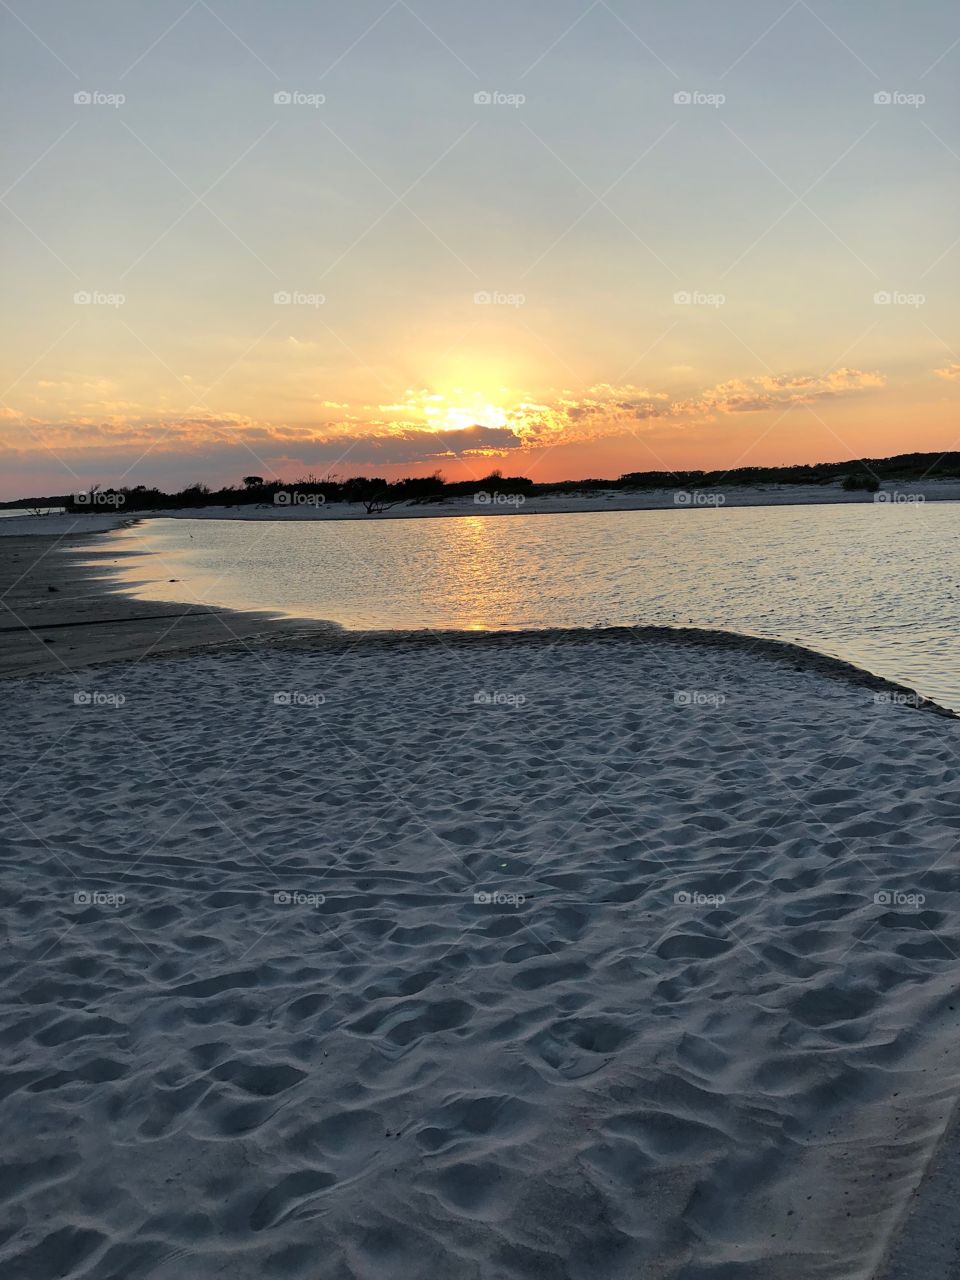 Stunning sunset at Folly Beach, South Carolina.